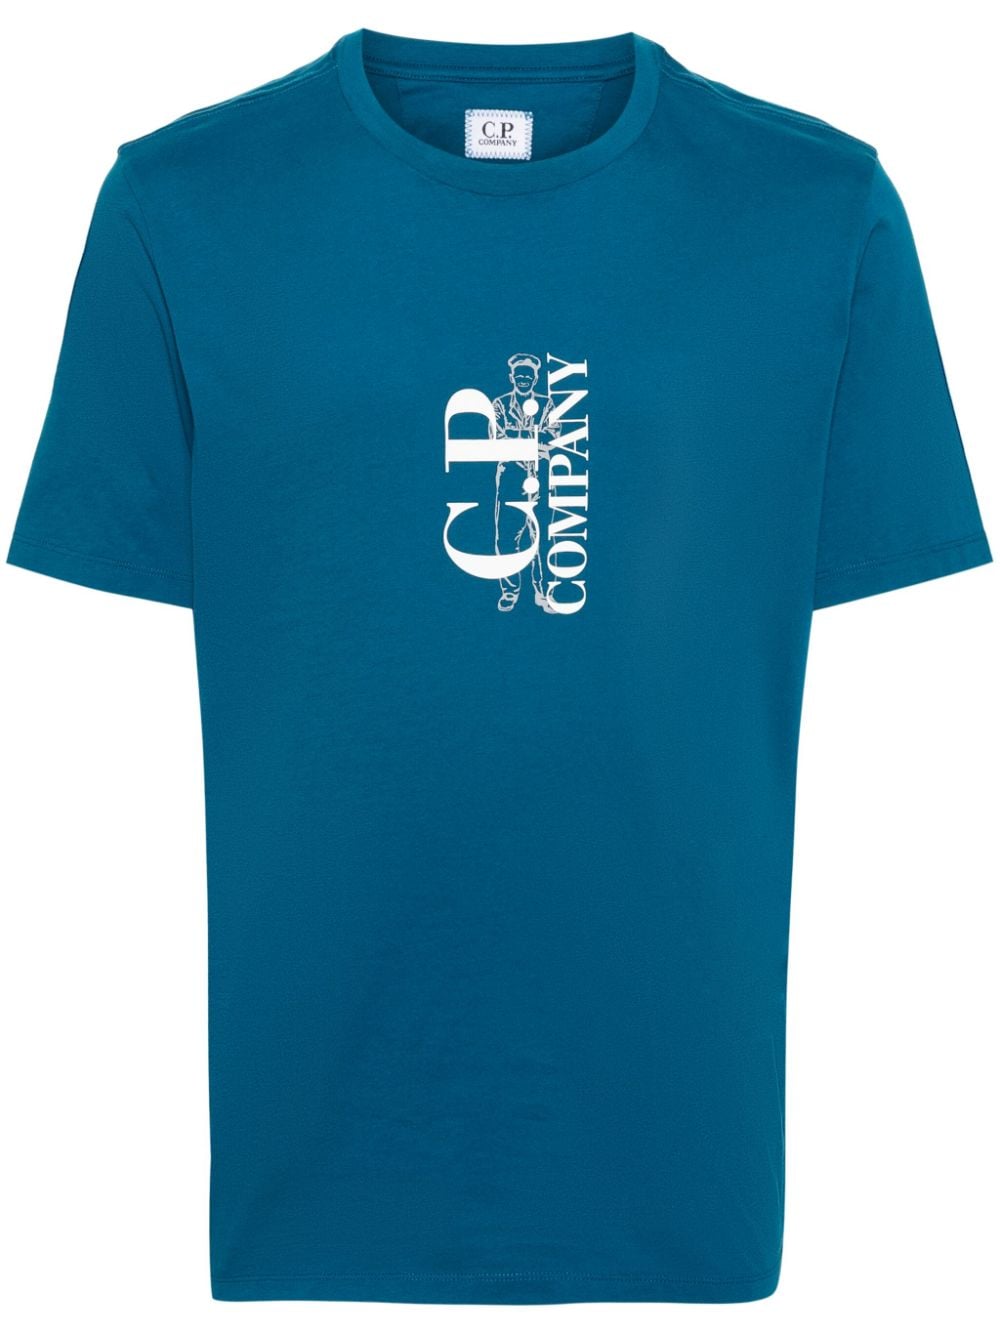 C.P Company 30/1 Jersey British Sailor T-shirt ink blue - Lothaire